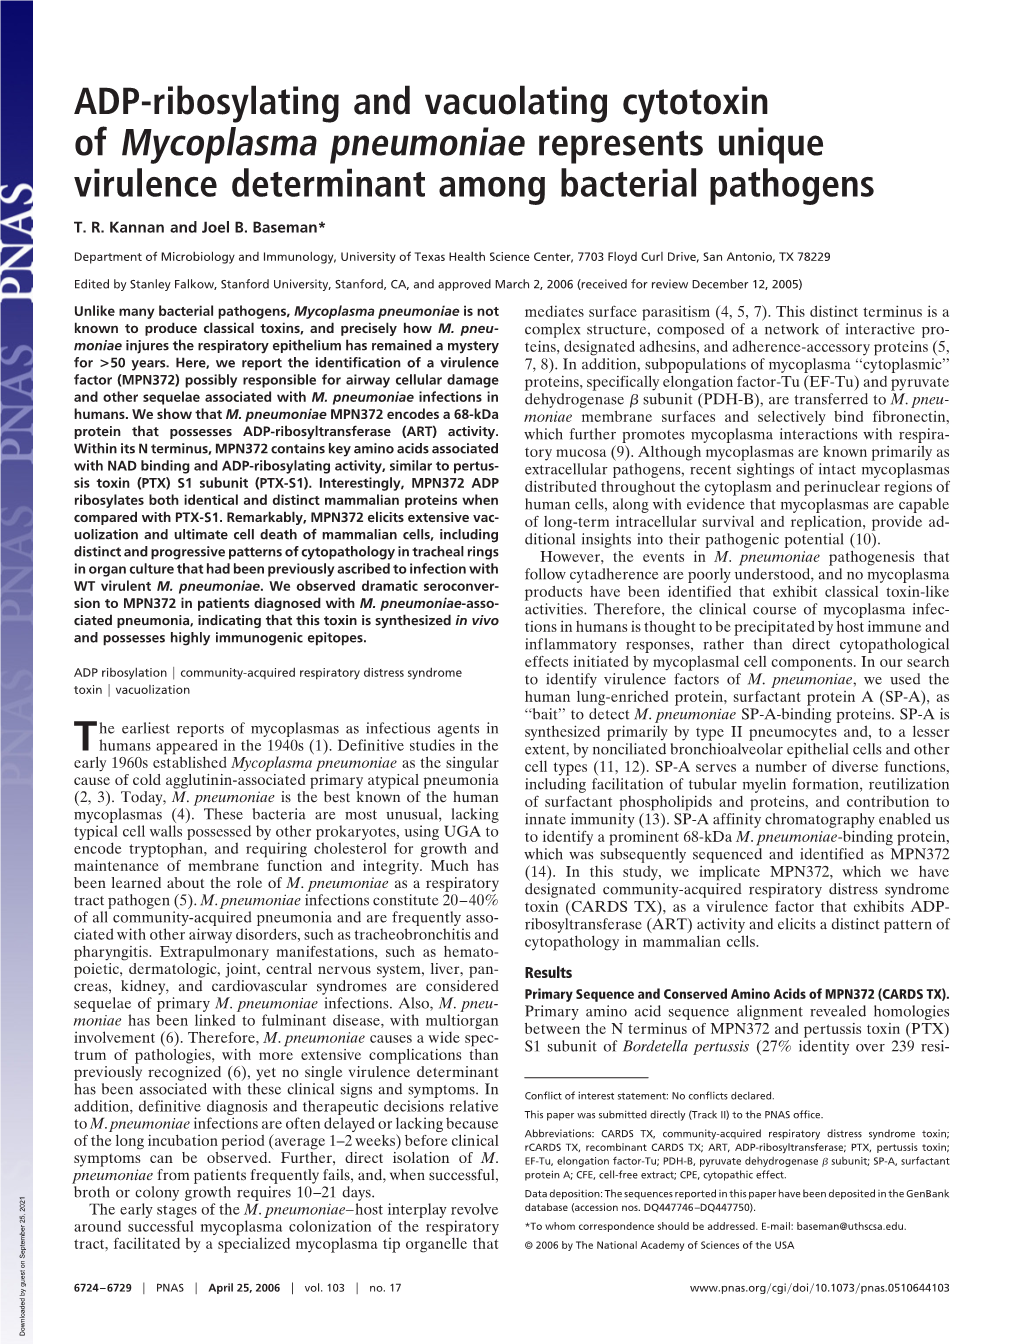 ADP-Ribosylating and Vacuolating Cytotoxin of Mycoplasma Pneumoniae Represents Unique Virulence Determinant Among Bacterial Pathogens